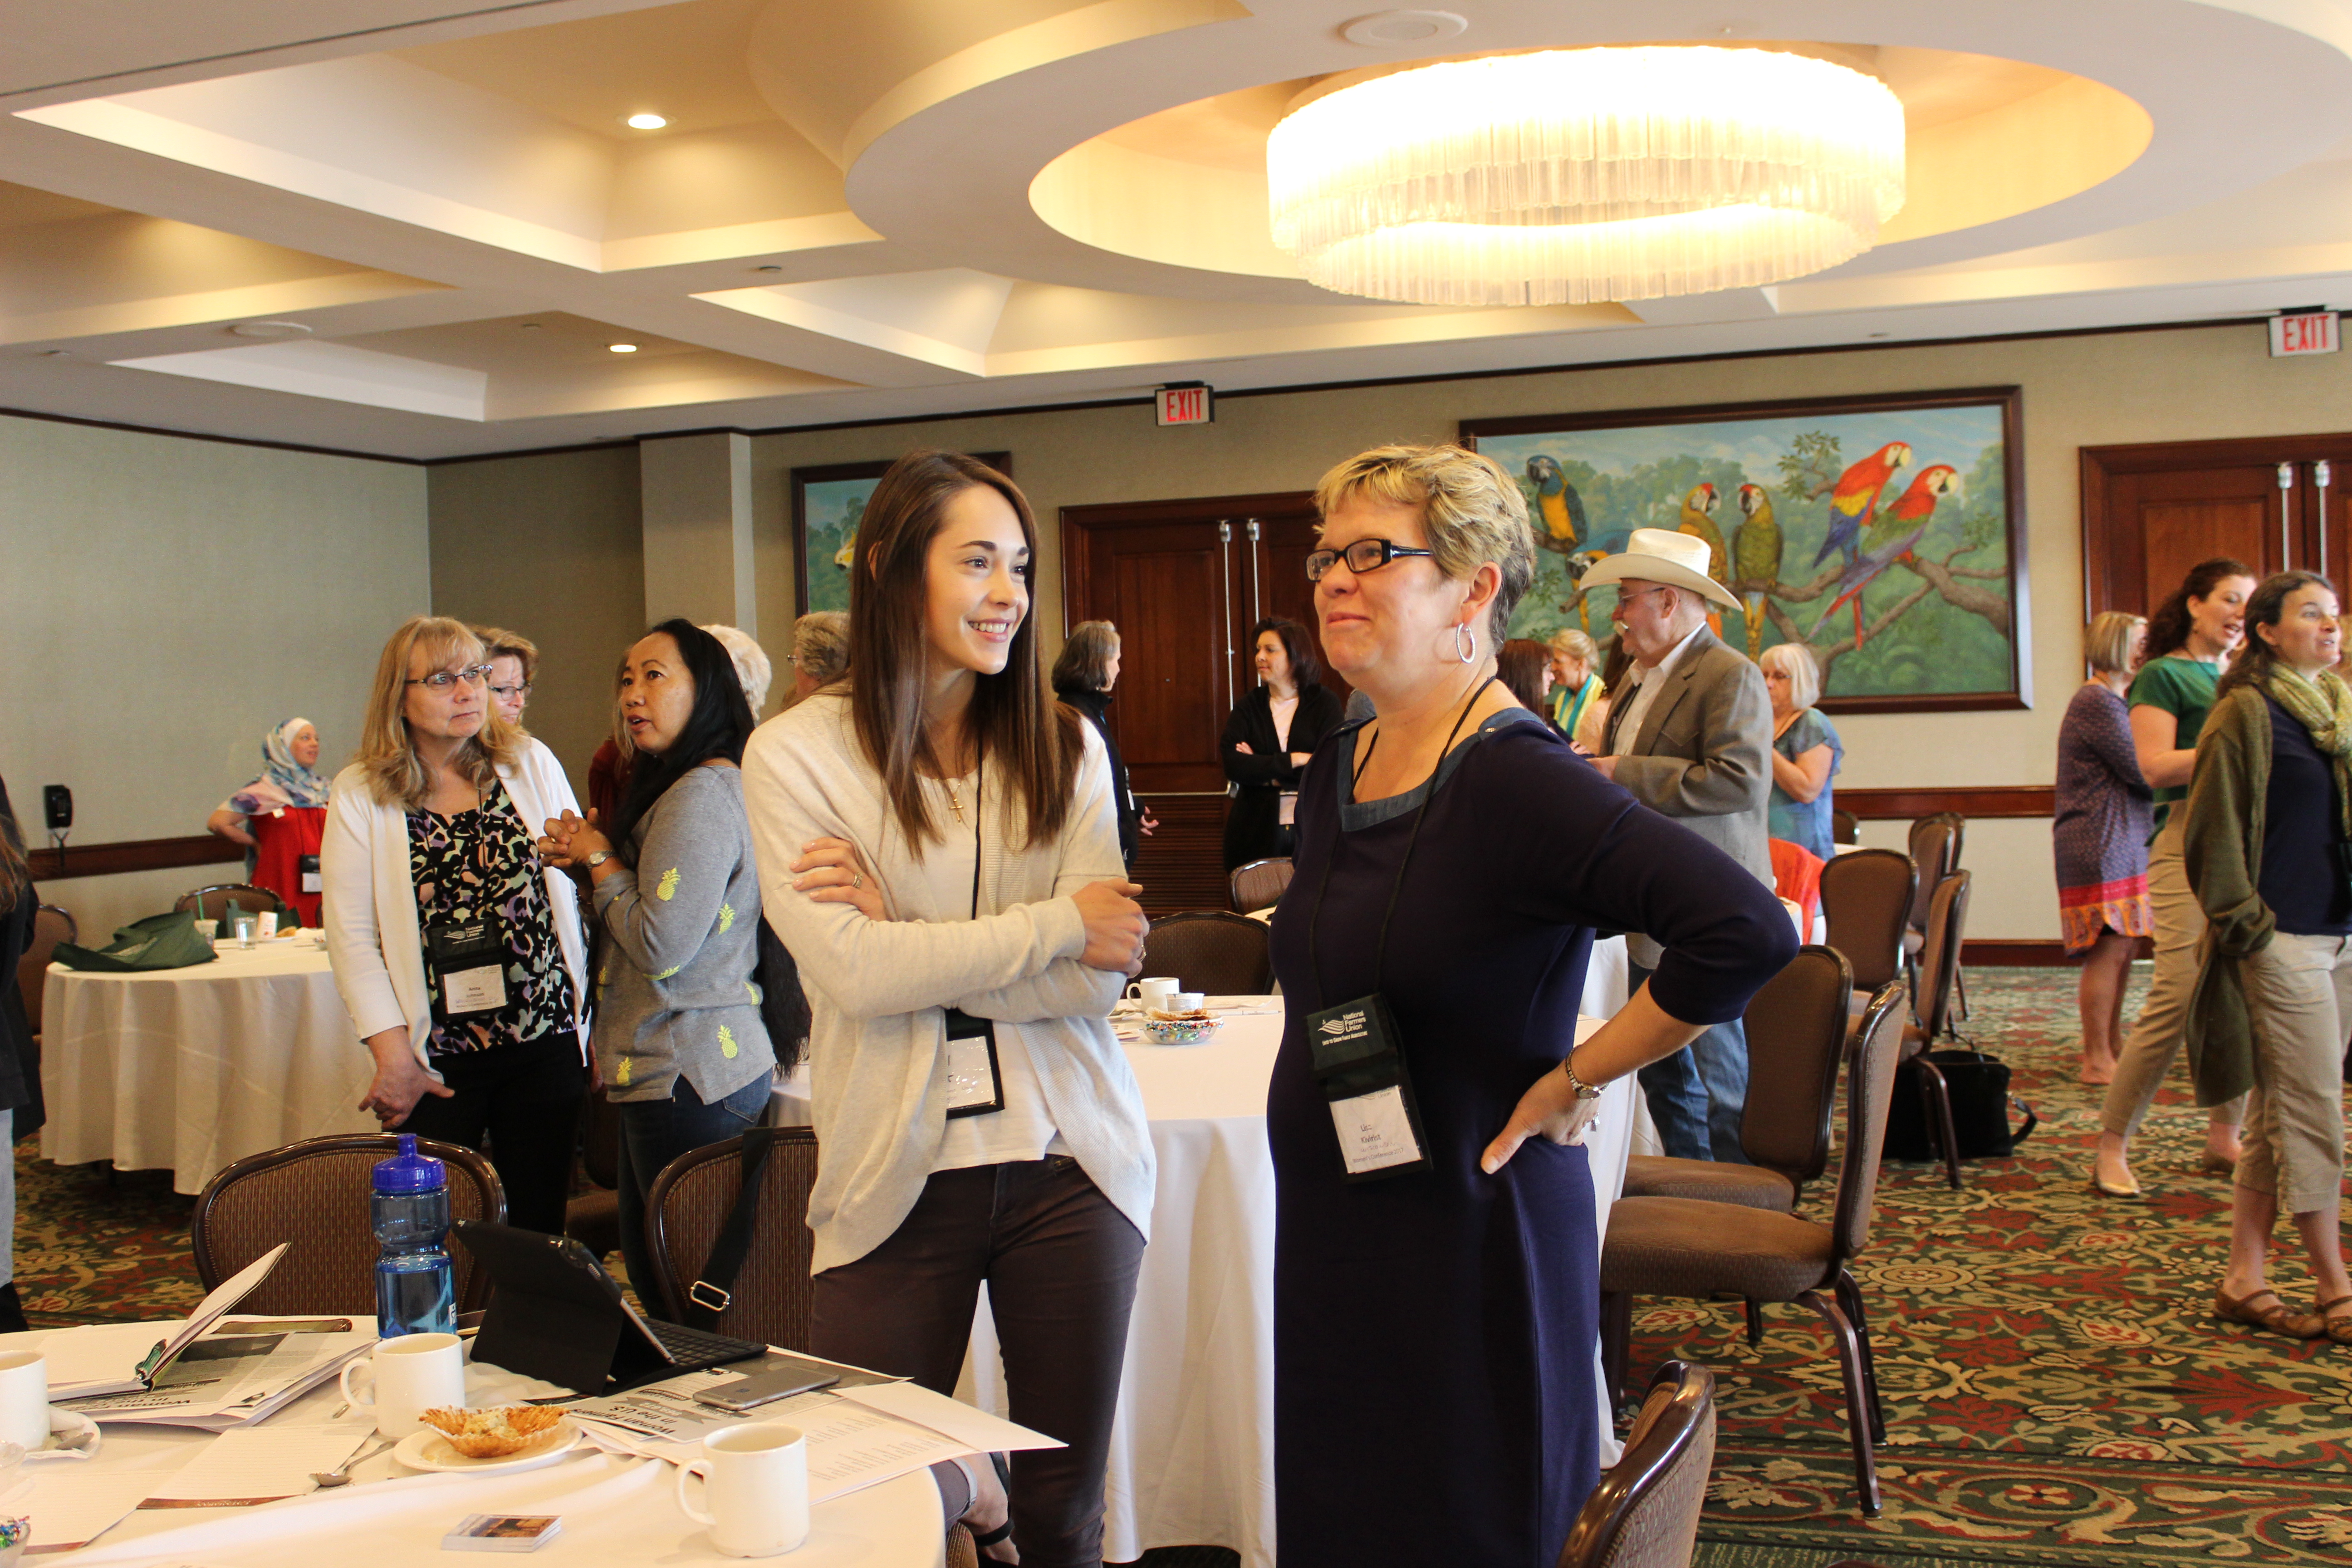 NFU Women’s Conference Provides Management, Leadership Skills